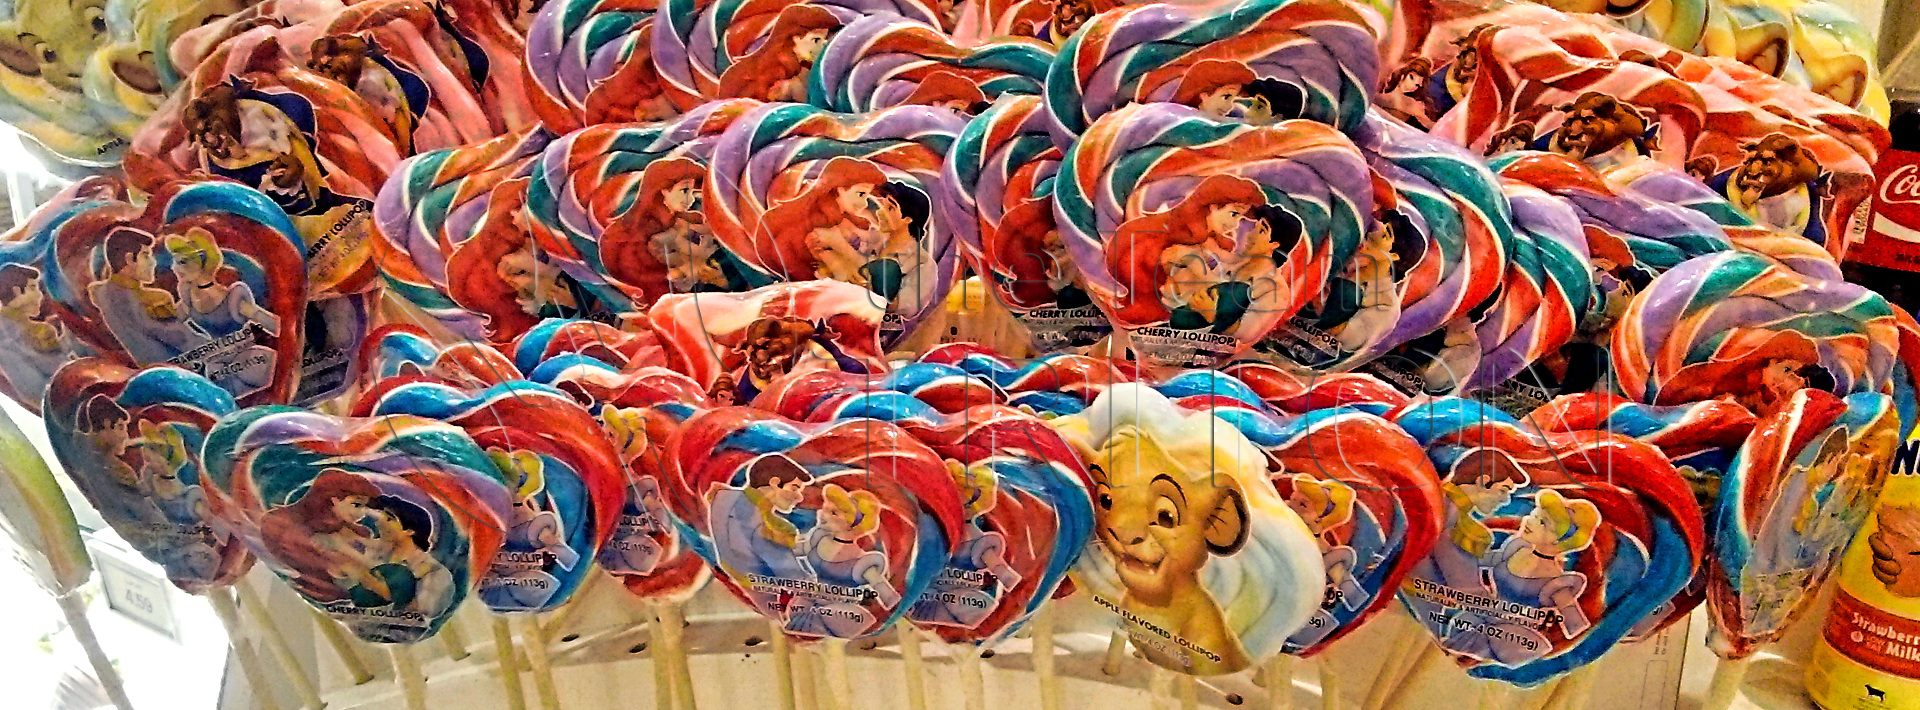 souvenir-sweets-candy-001